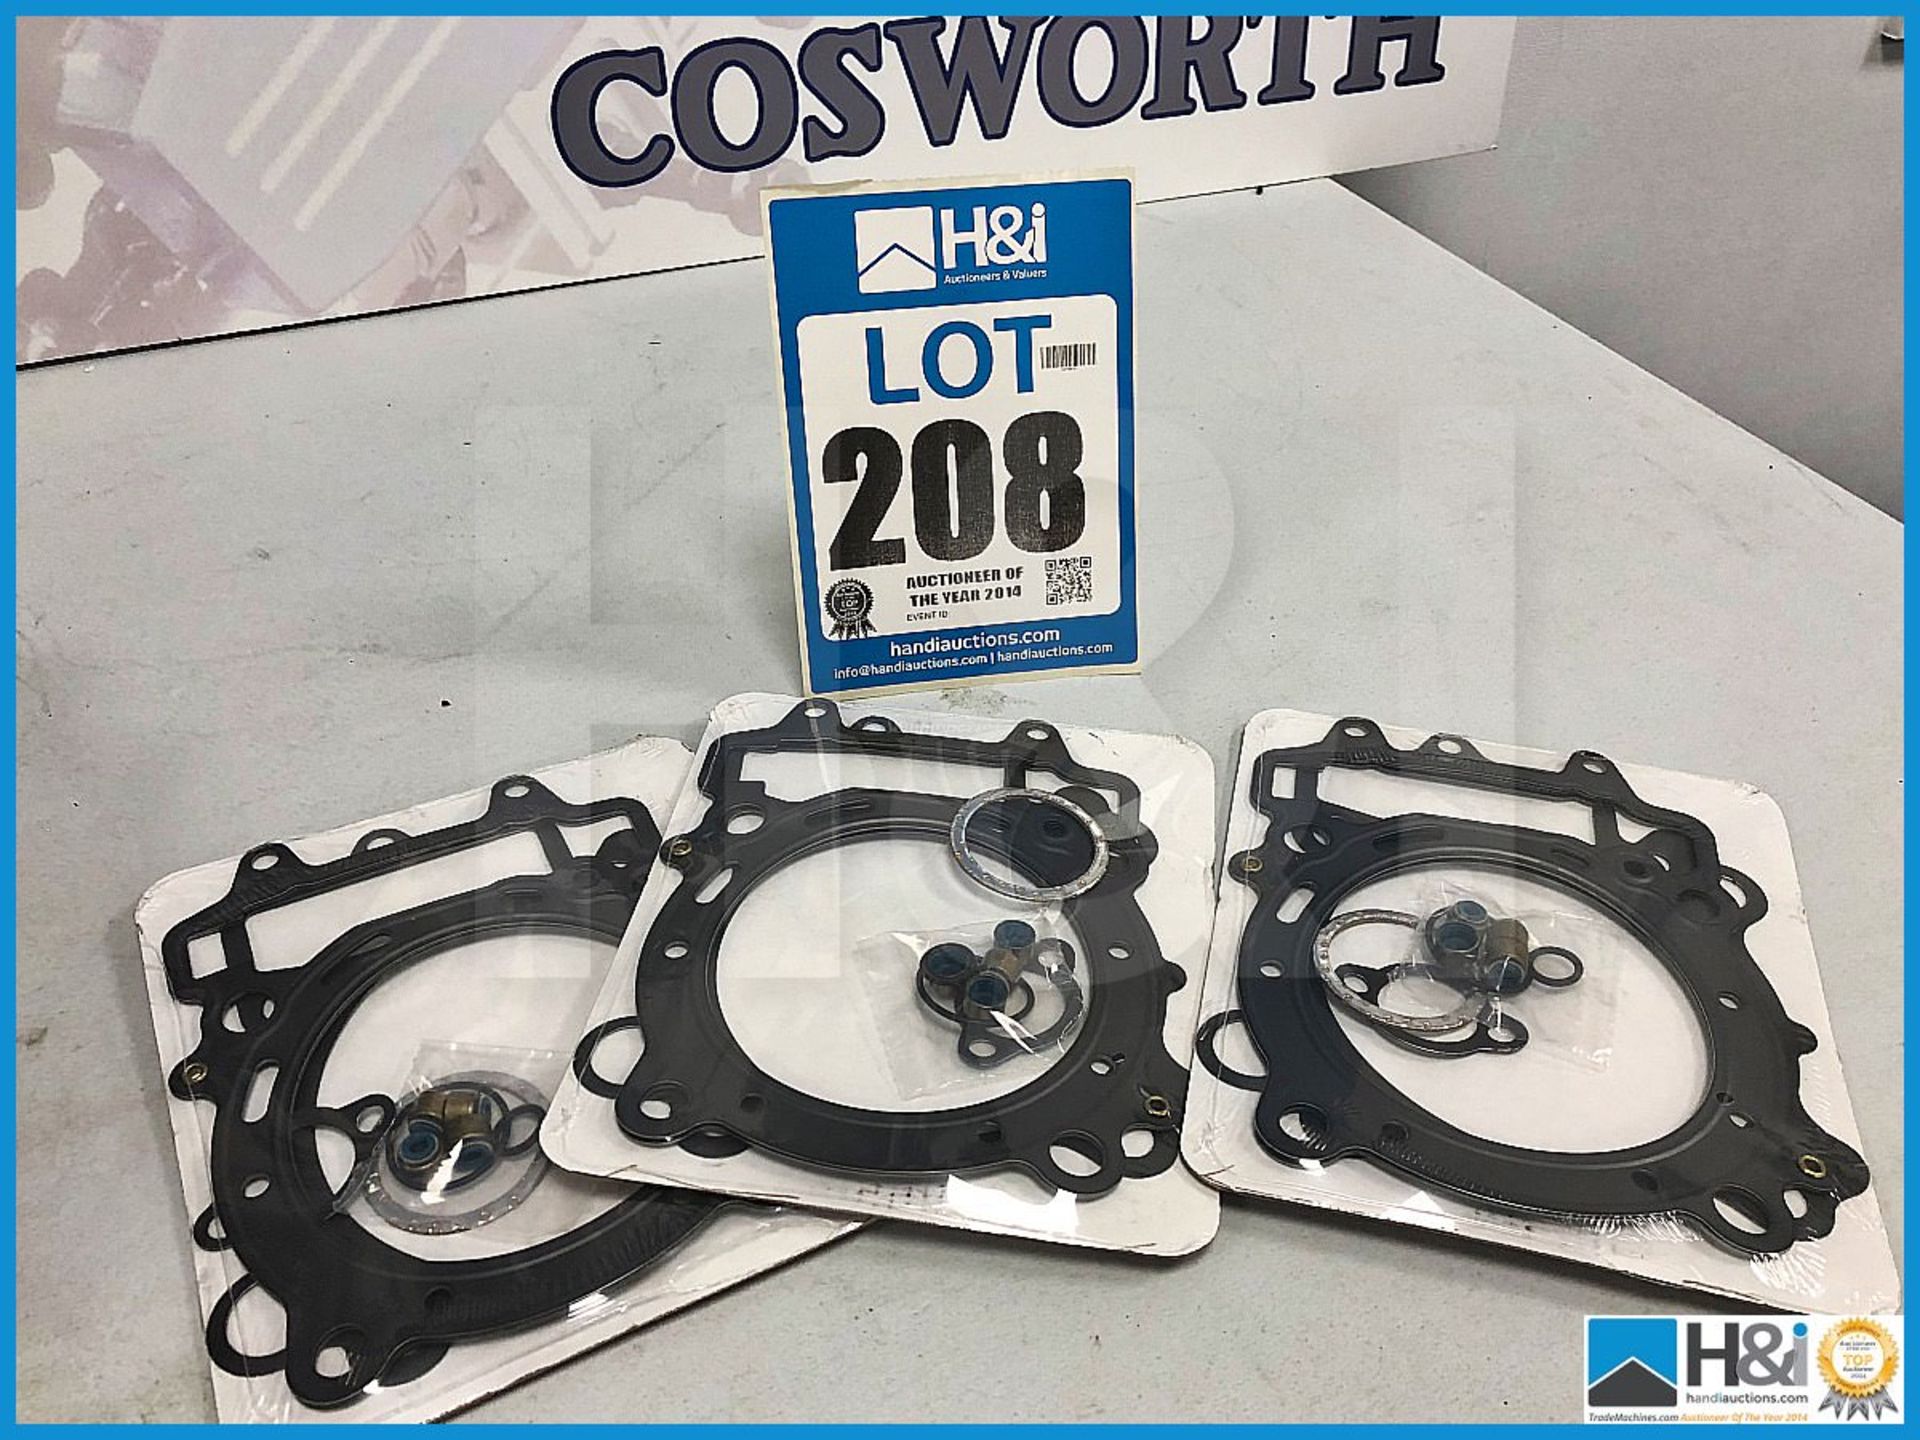 3 x Cosworth gasket kit - Kawasaki KX450F Top End 06-09. Code: 20011292